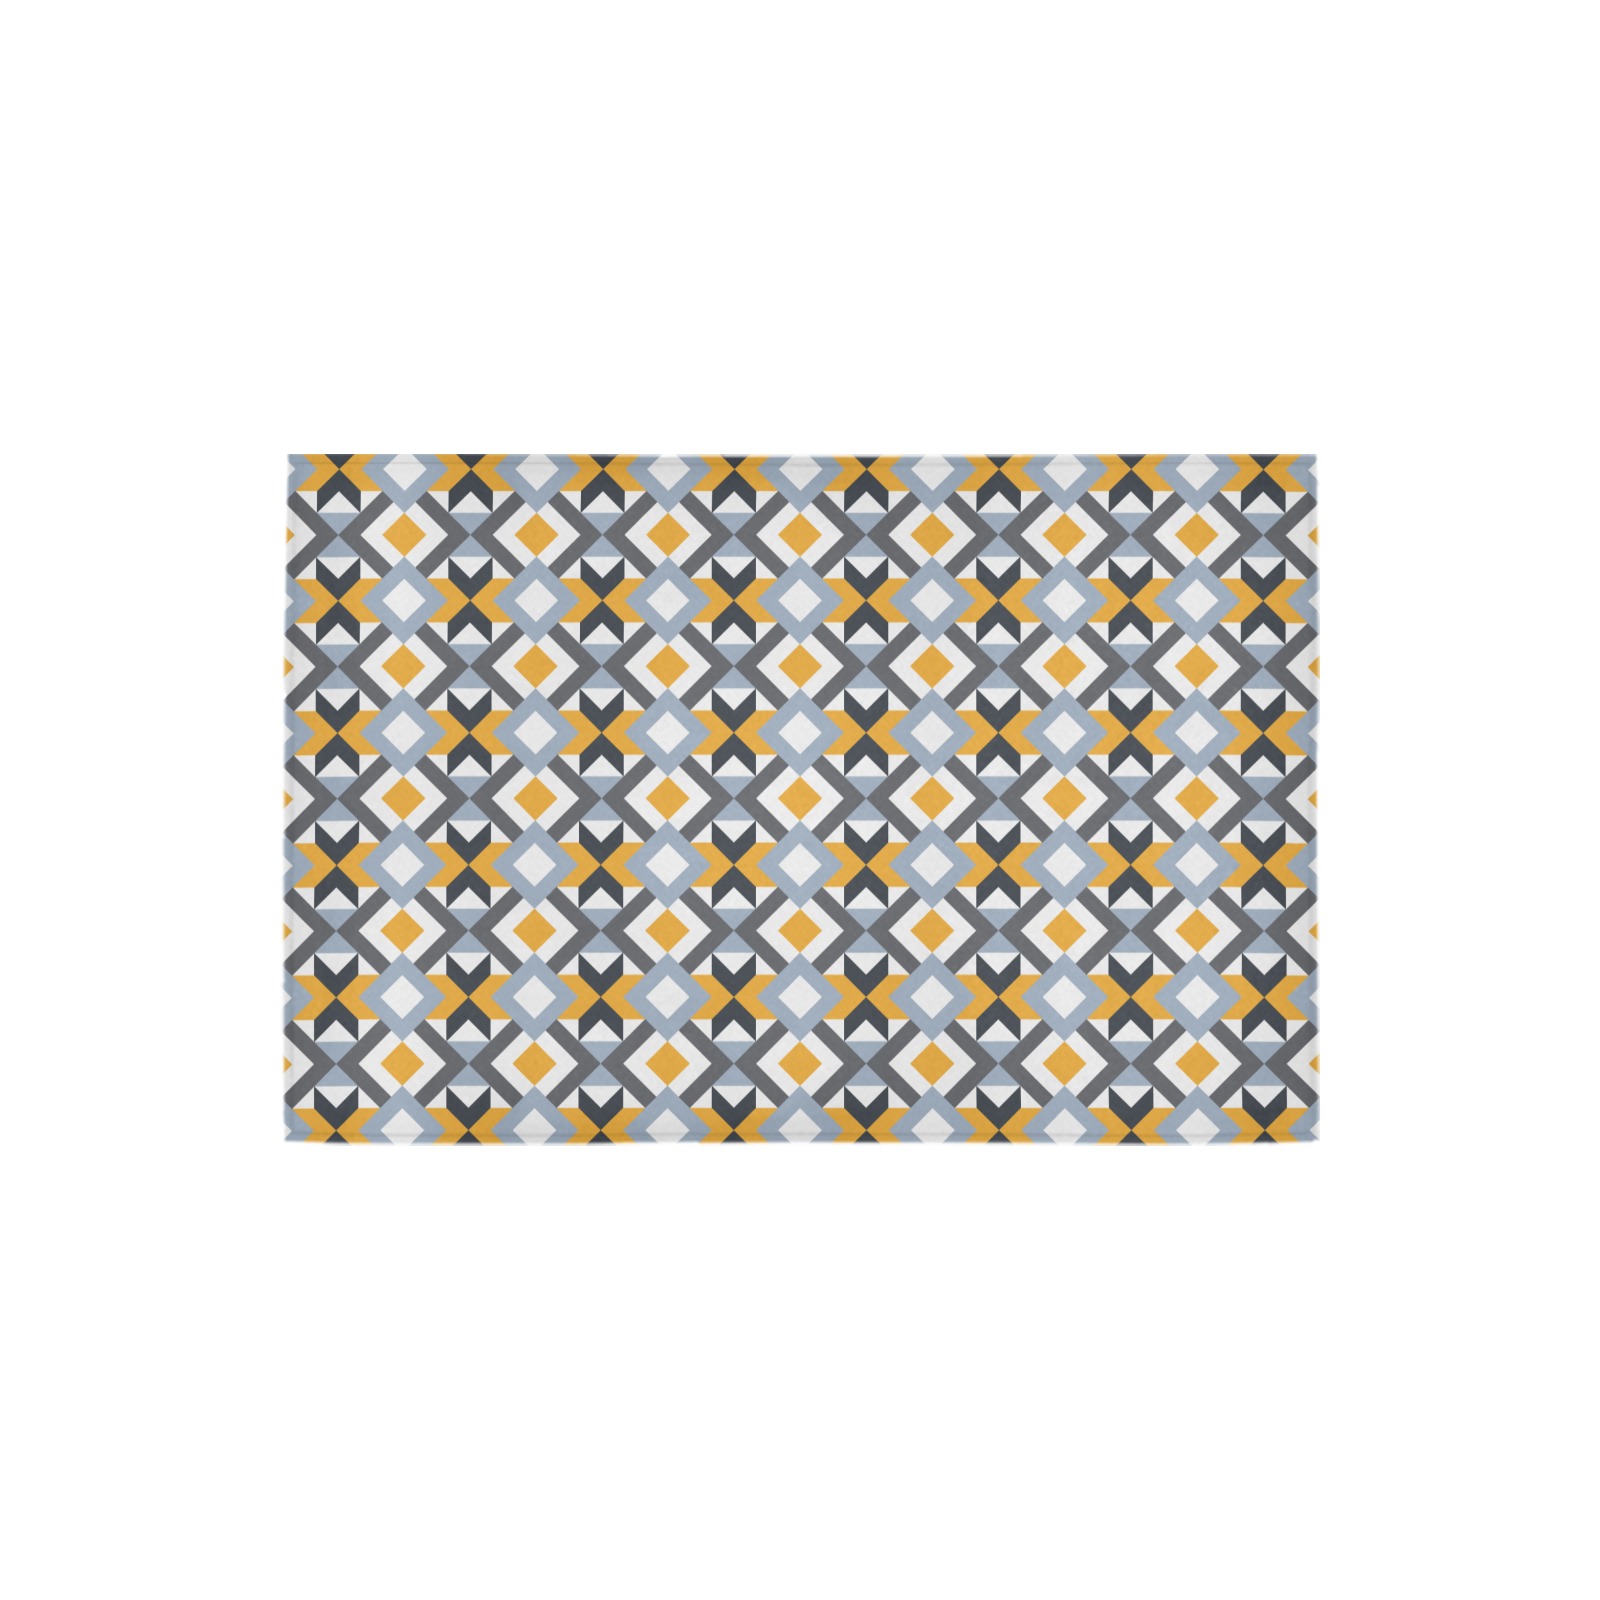 Retro Angles Abstract Geometric Pattern Azalea Doormat 24" x 16" (Sponge Material)